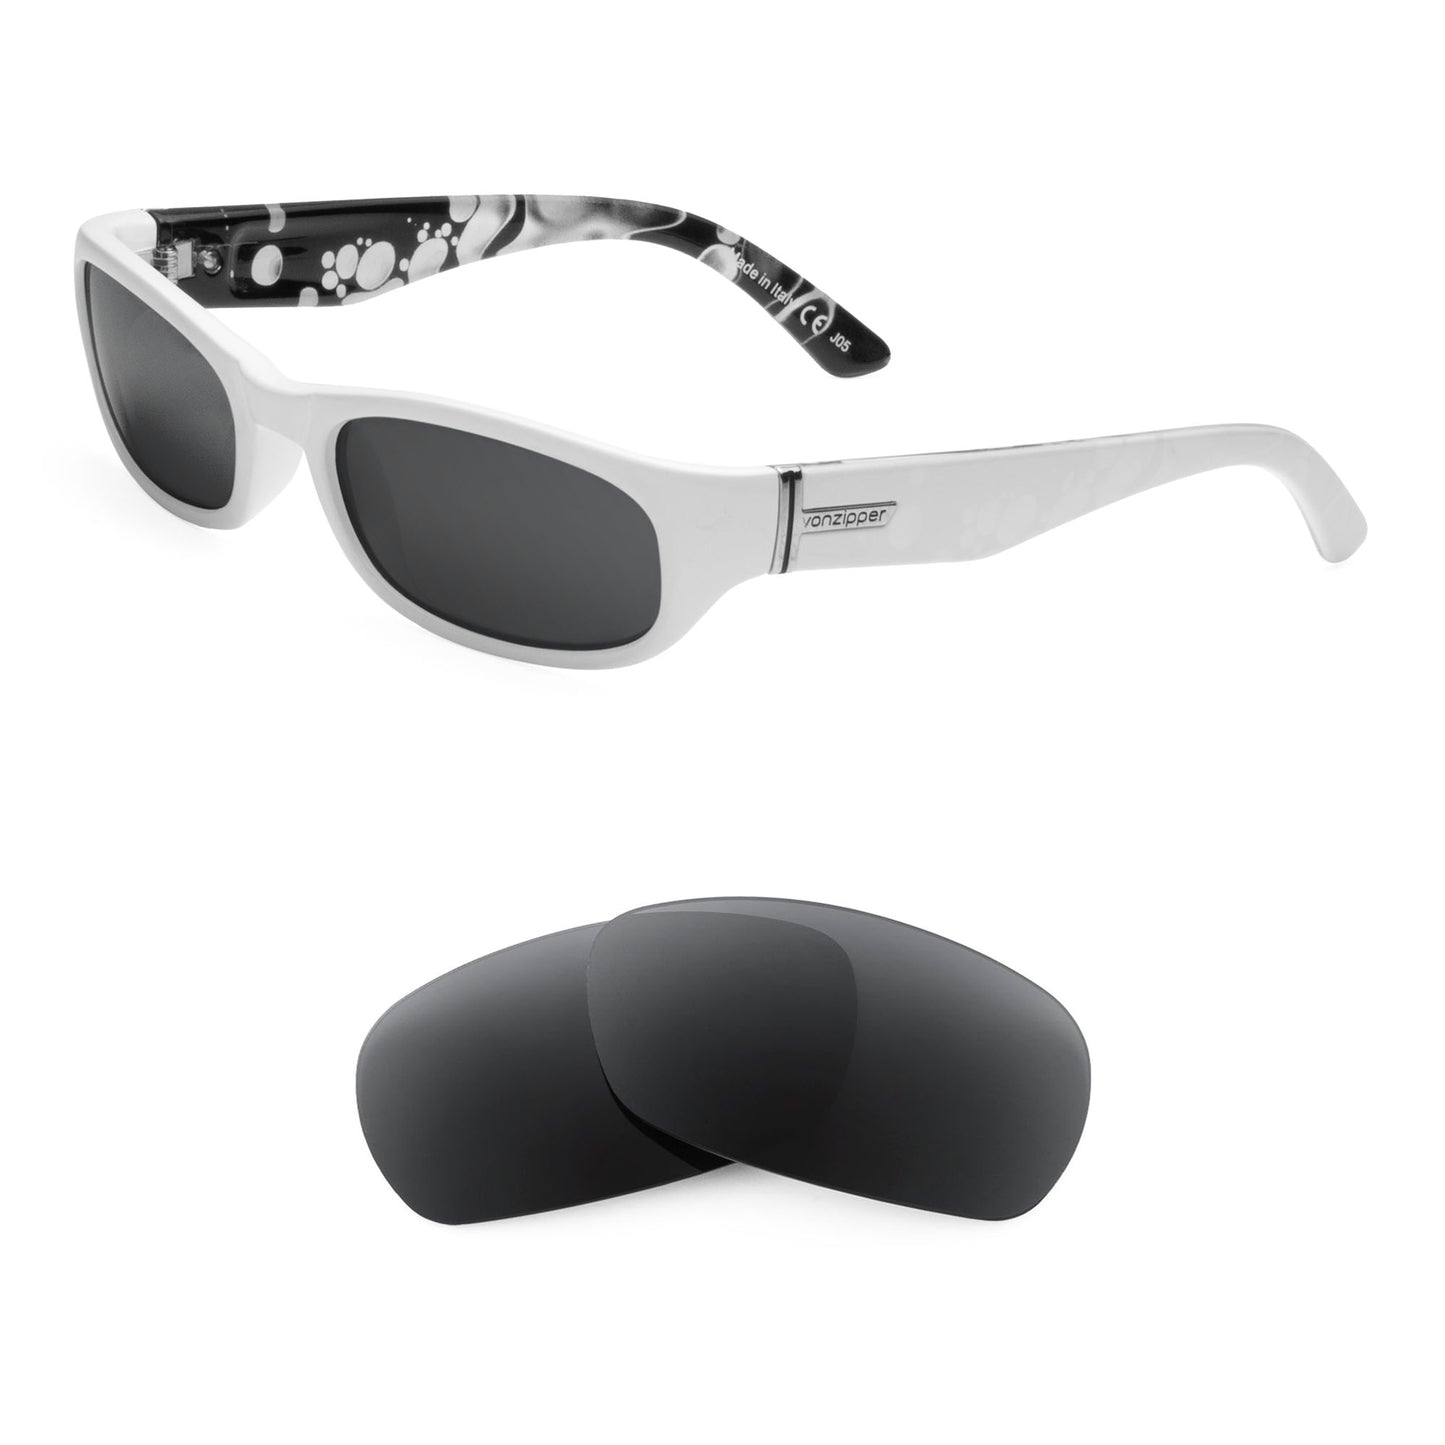 VonZipper Unit sunglasses with replacement lenses